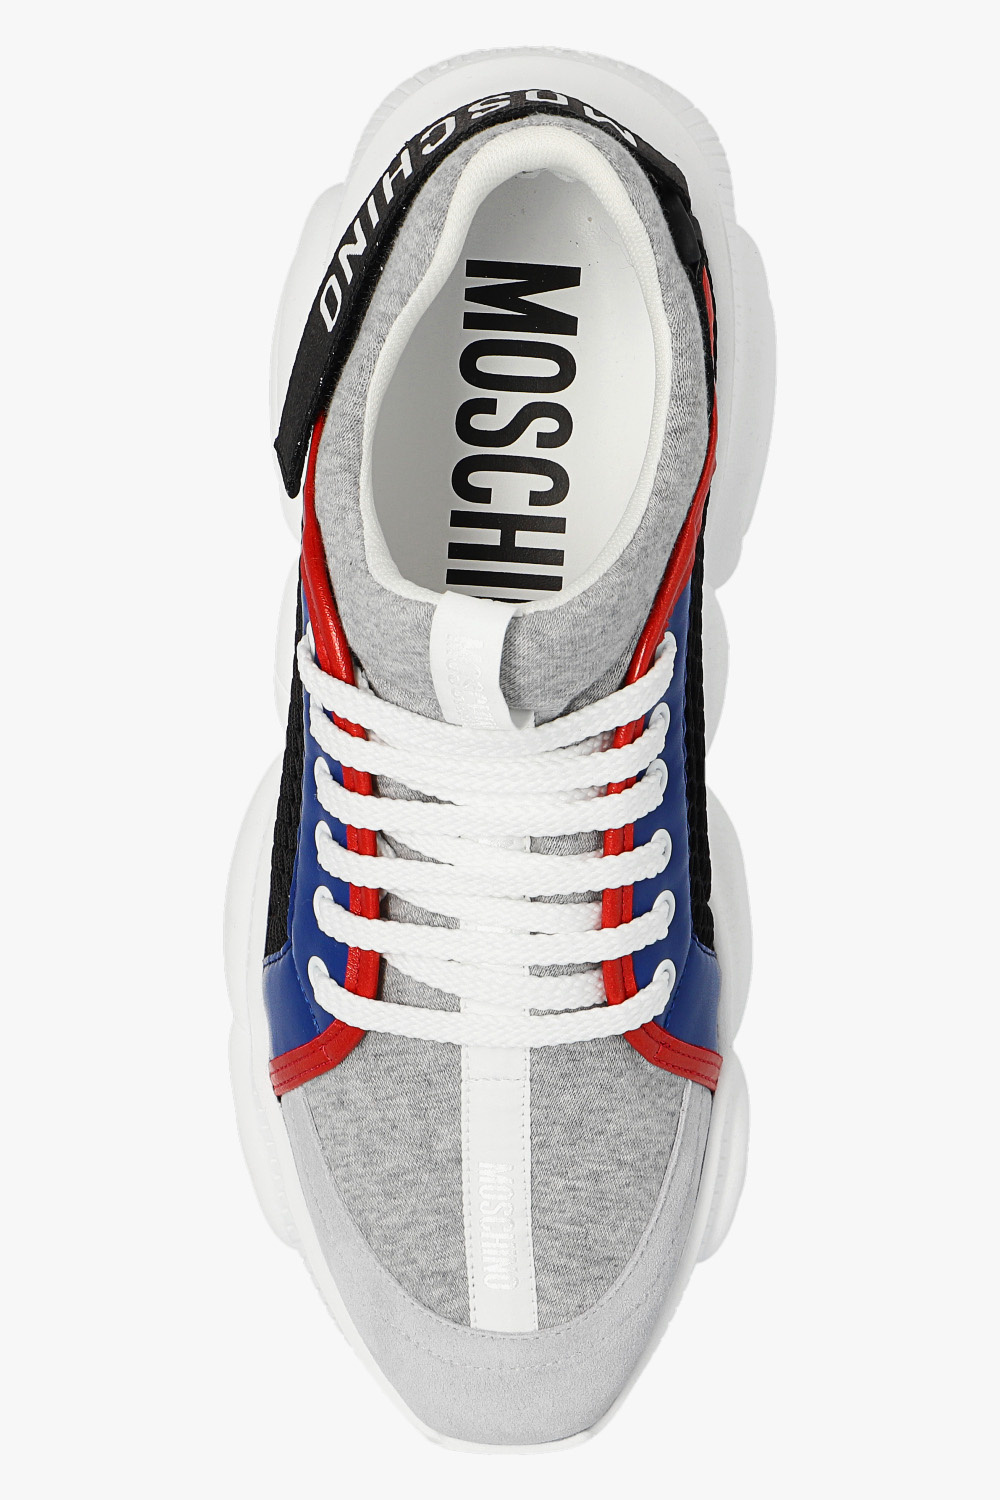 Moschino Cell Endura Reflective Sneakers White